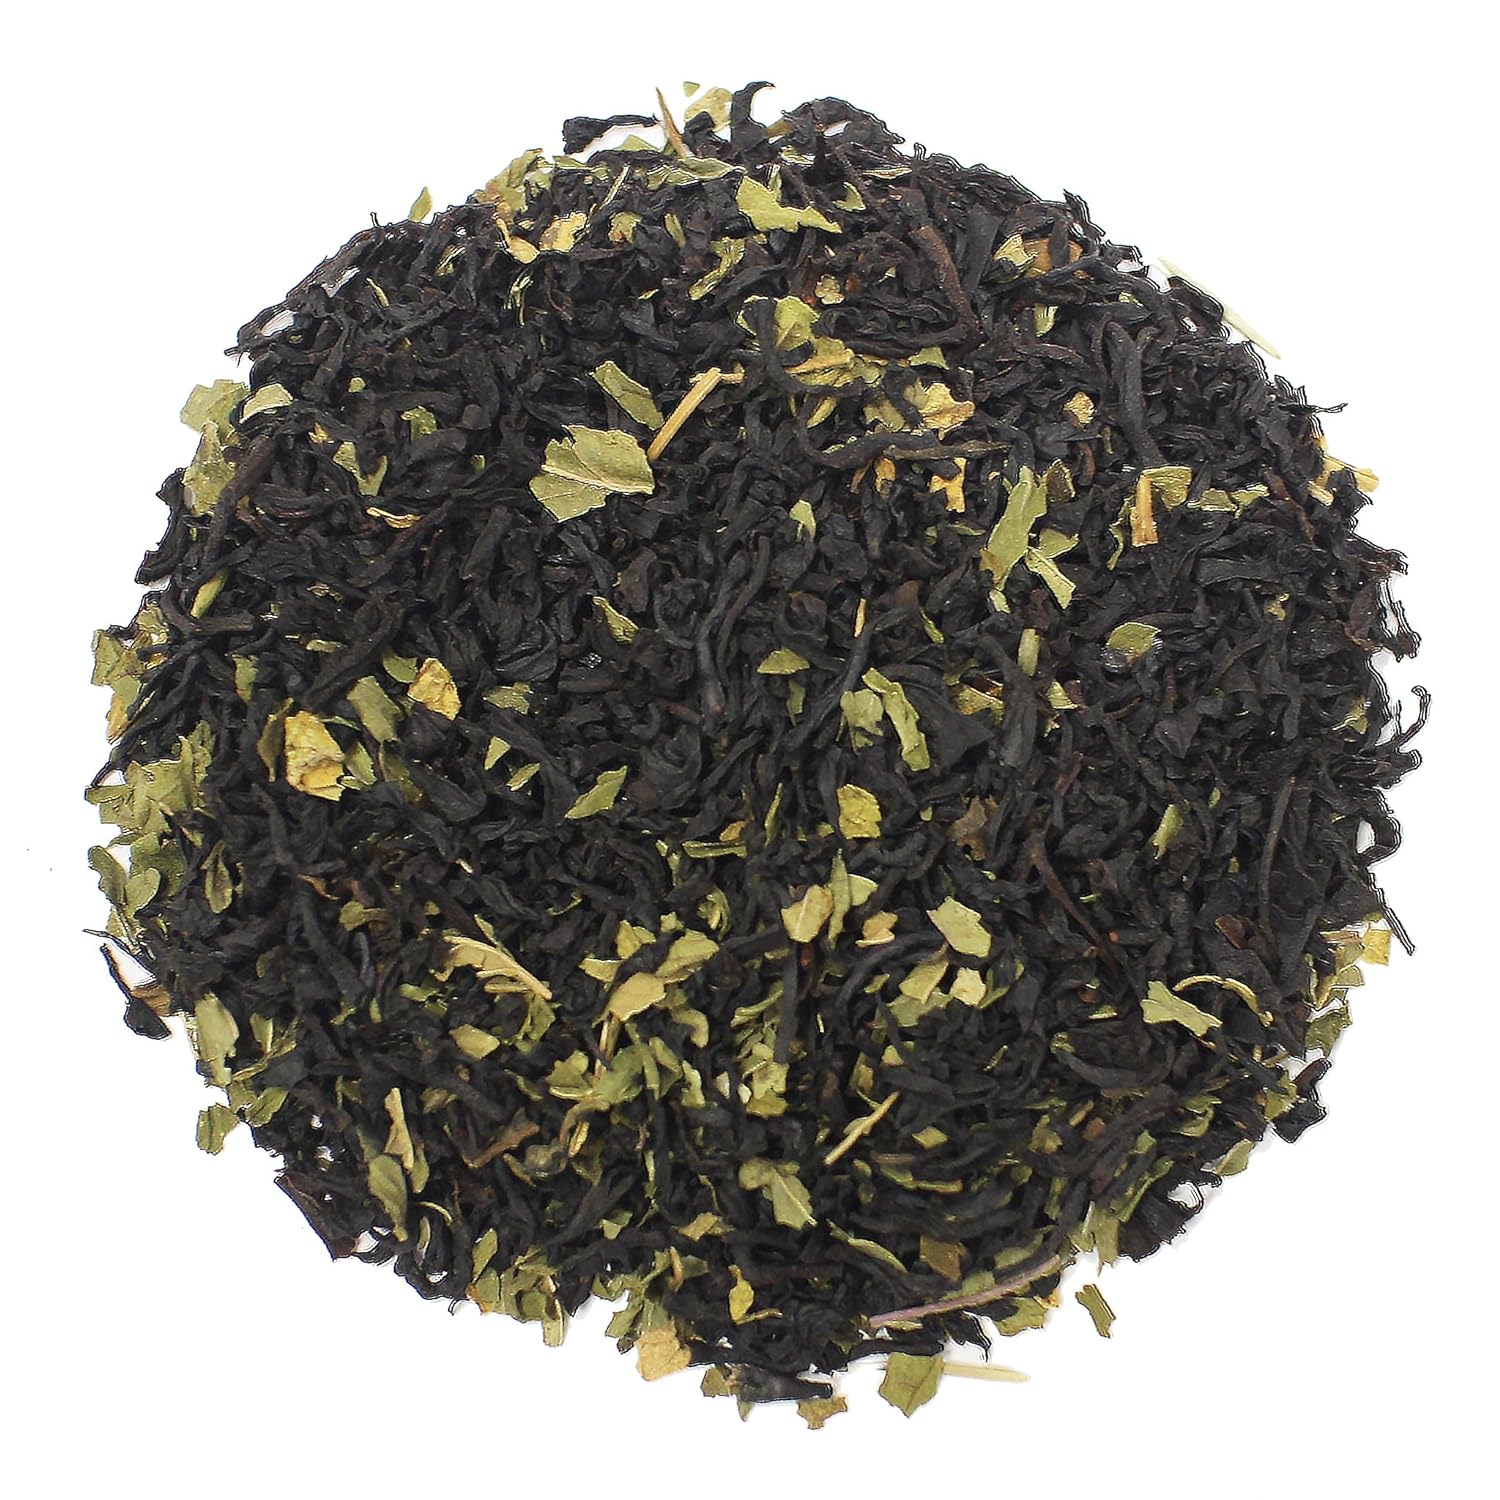 black tea with peppermint leaves - 2-ounce loose leaf tea - Walmart.com